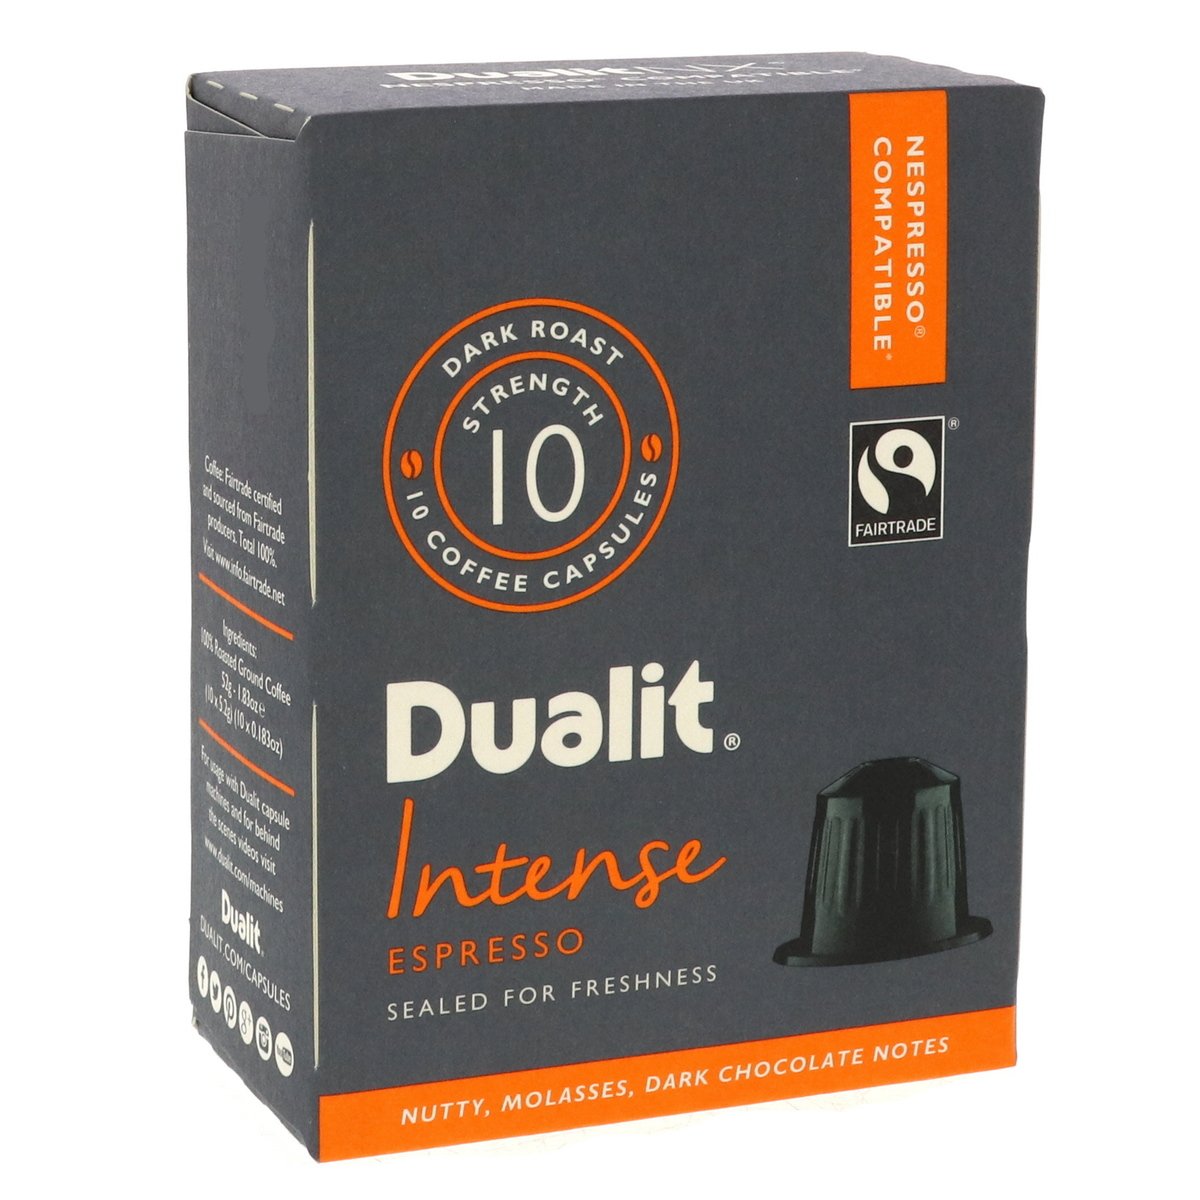 Dualit Intense Espresso 52 g